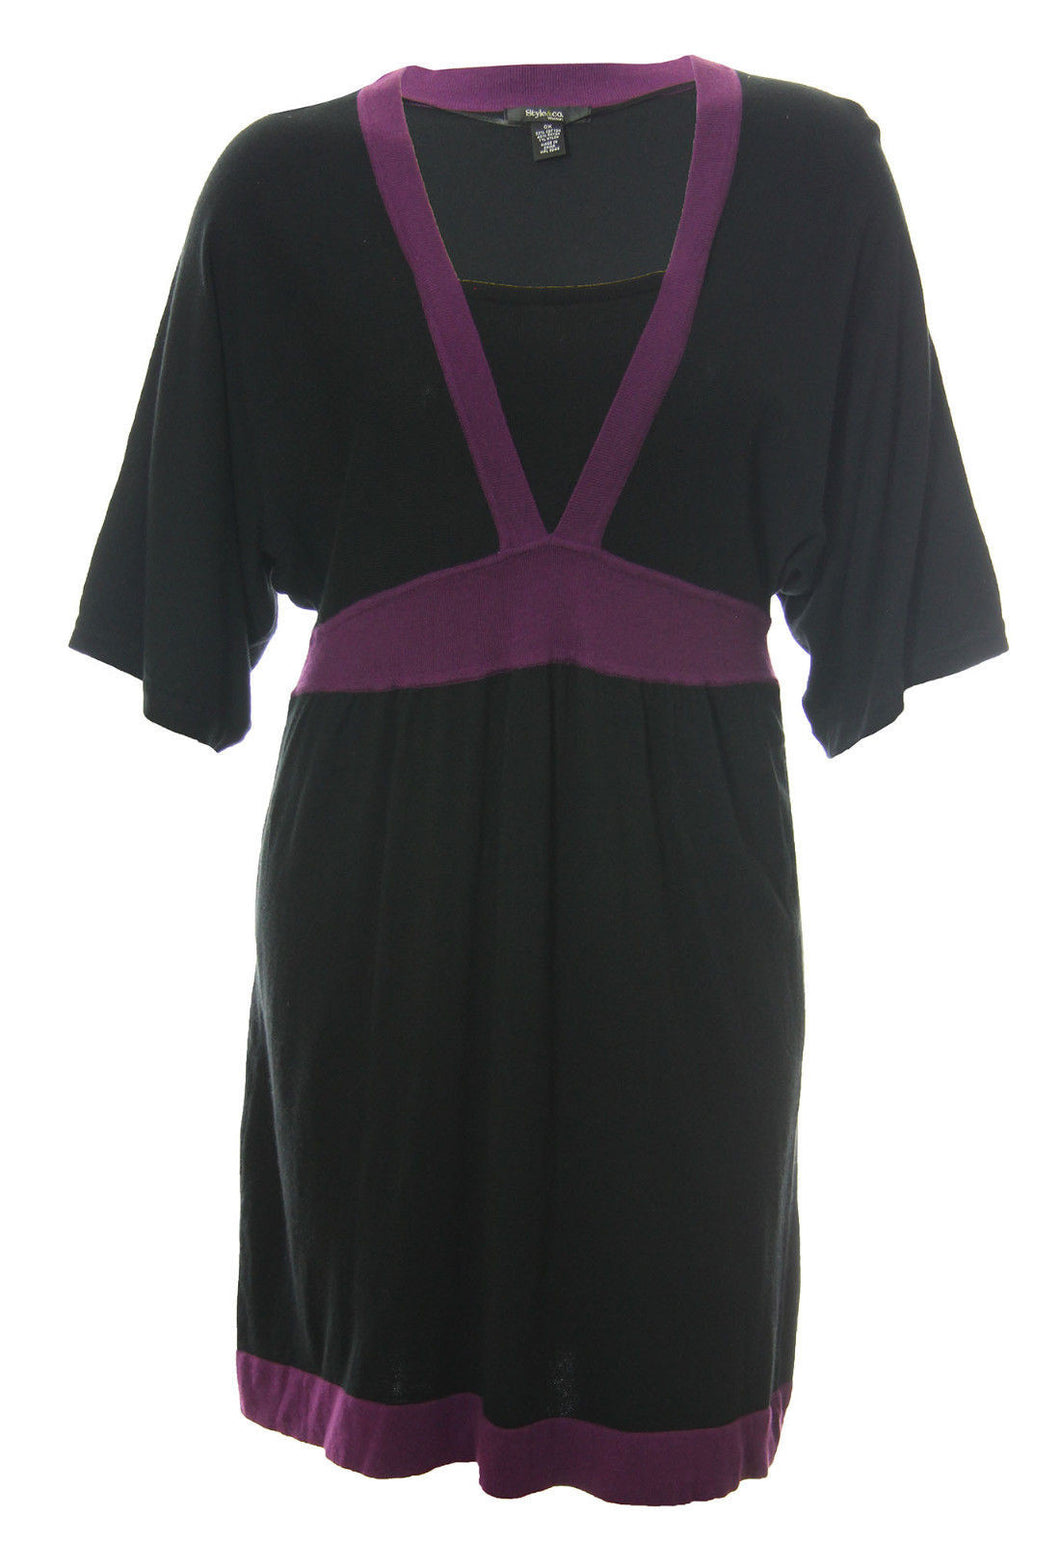 Style & Co Black & Purple Color Block 3/4 Sleeve Dress